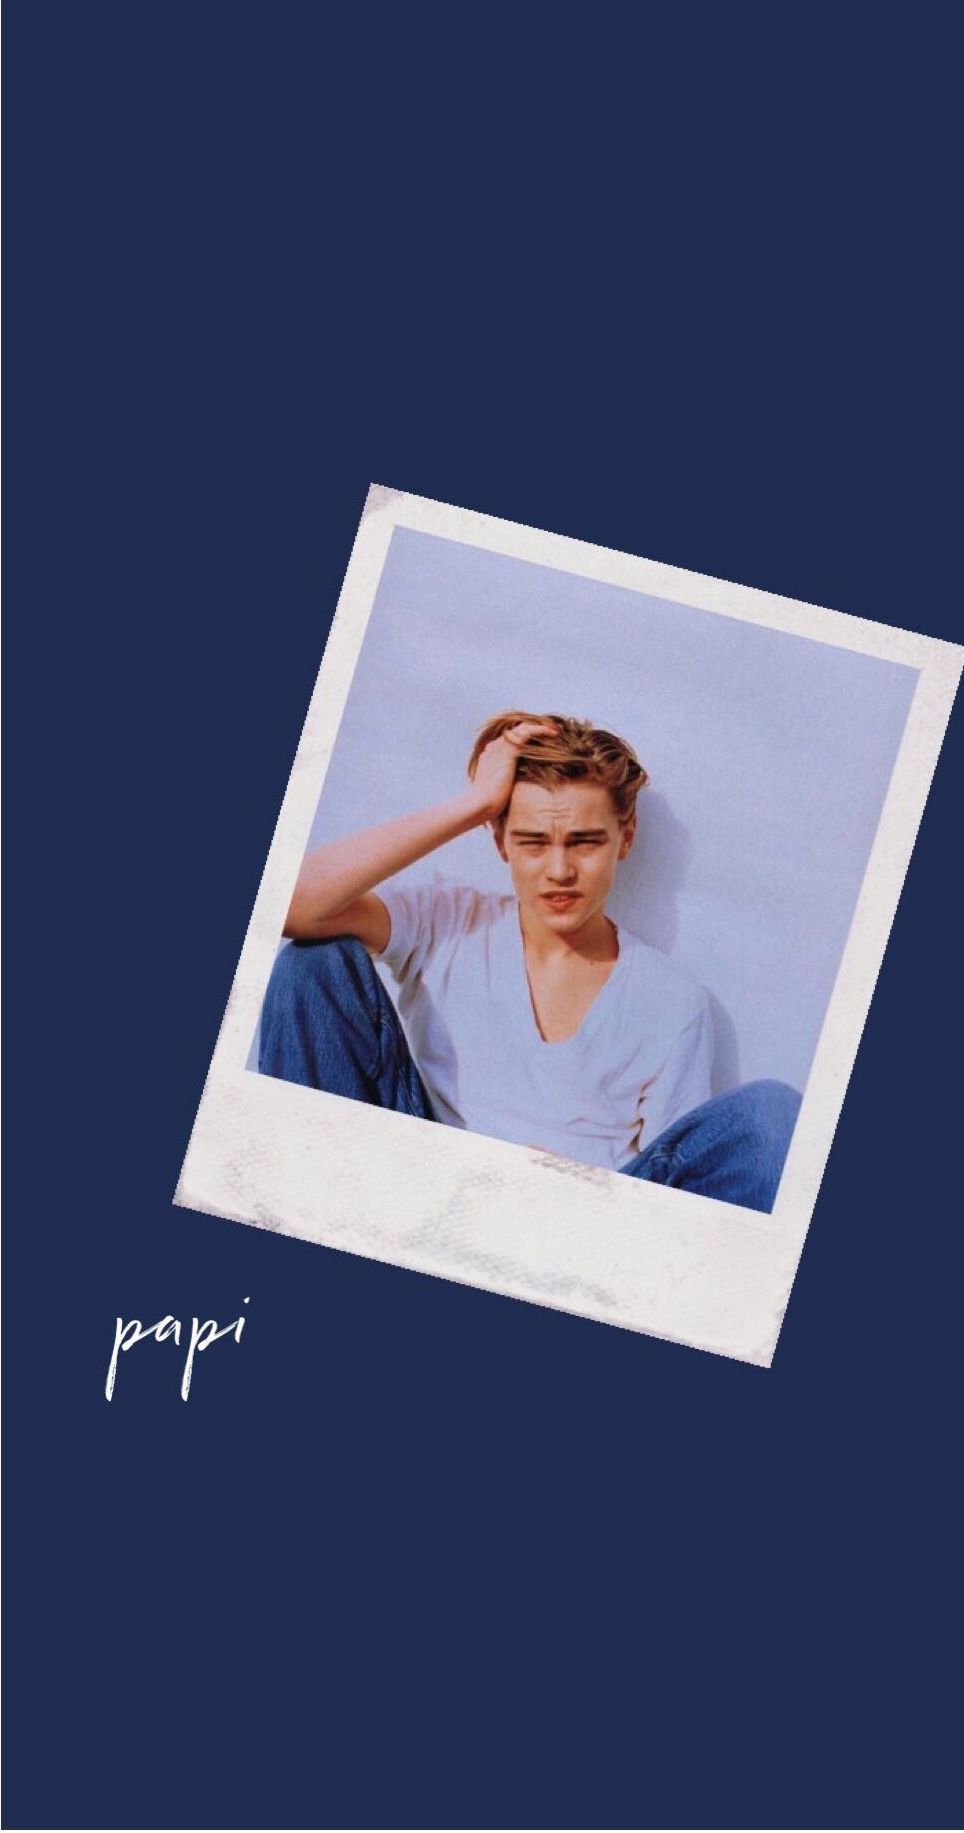 A polaroid of the person with their hair in front - Polaroid, Leonardo DiCaprio